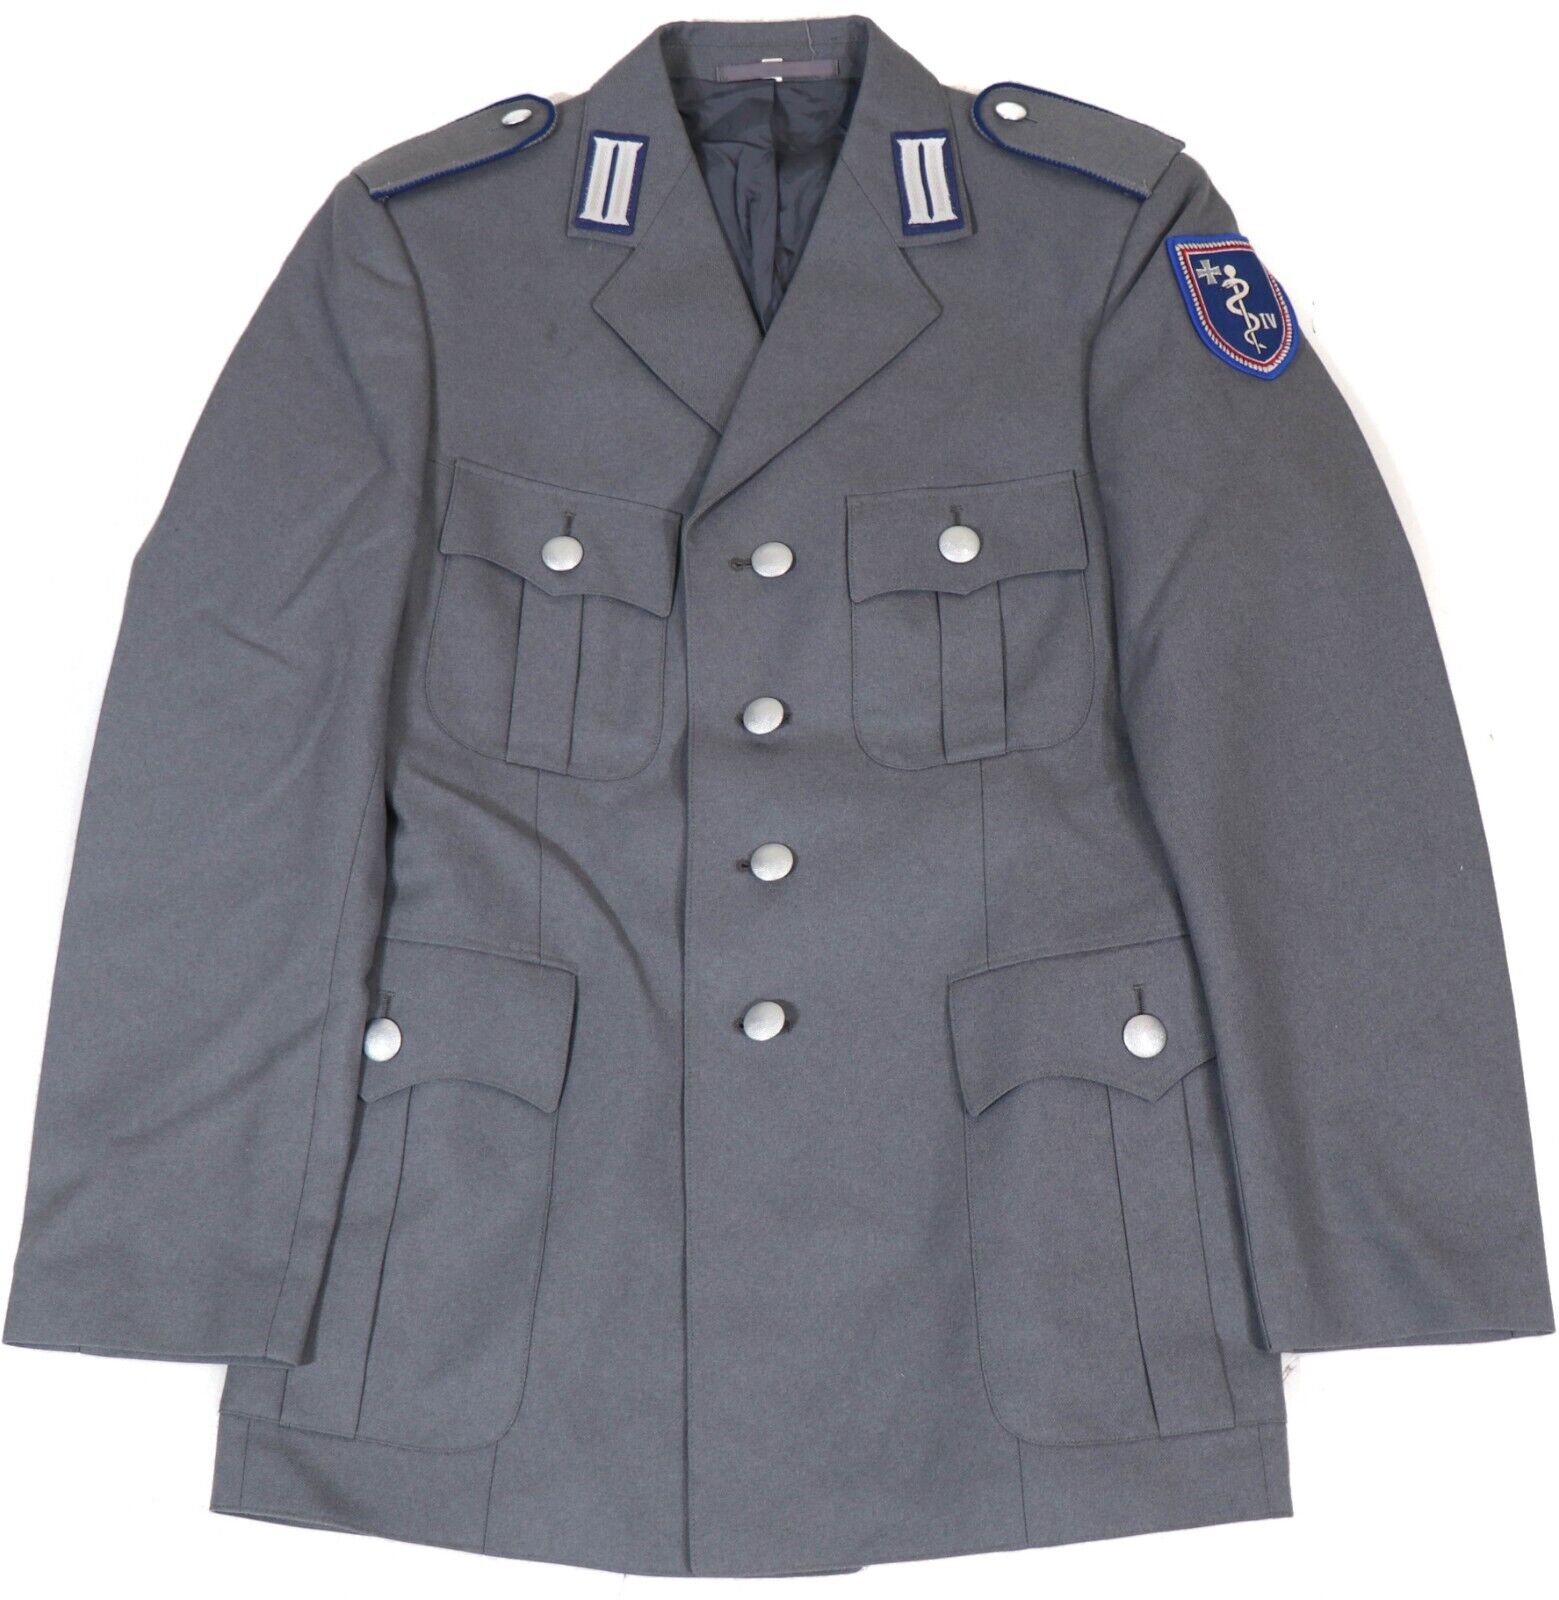 Small - Blue West German Army Bundeswehr Grey Army Officer Jacket Tunic